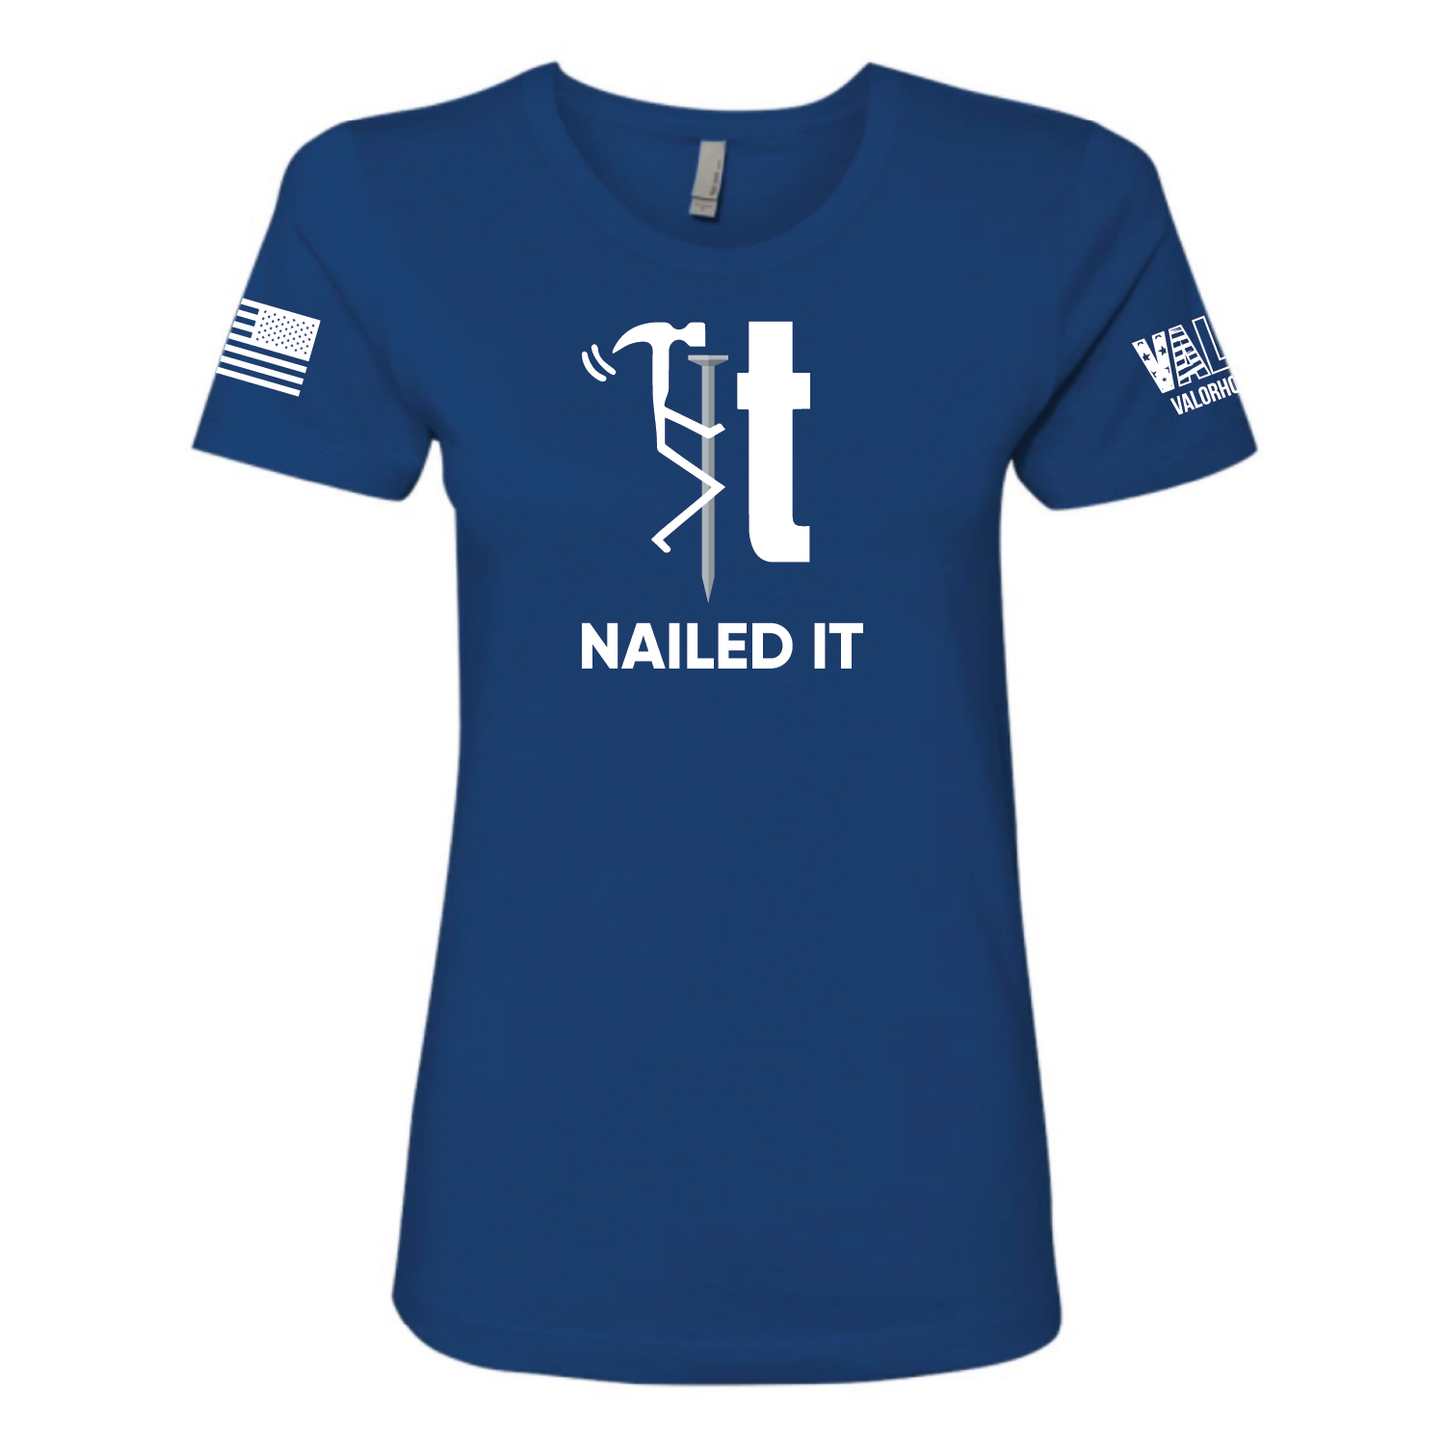 Ladies 'Nailed It' Shirt